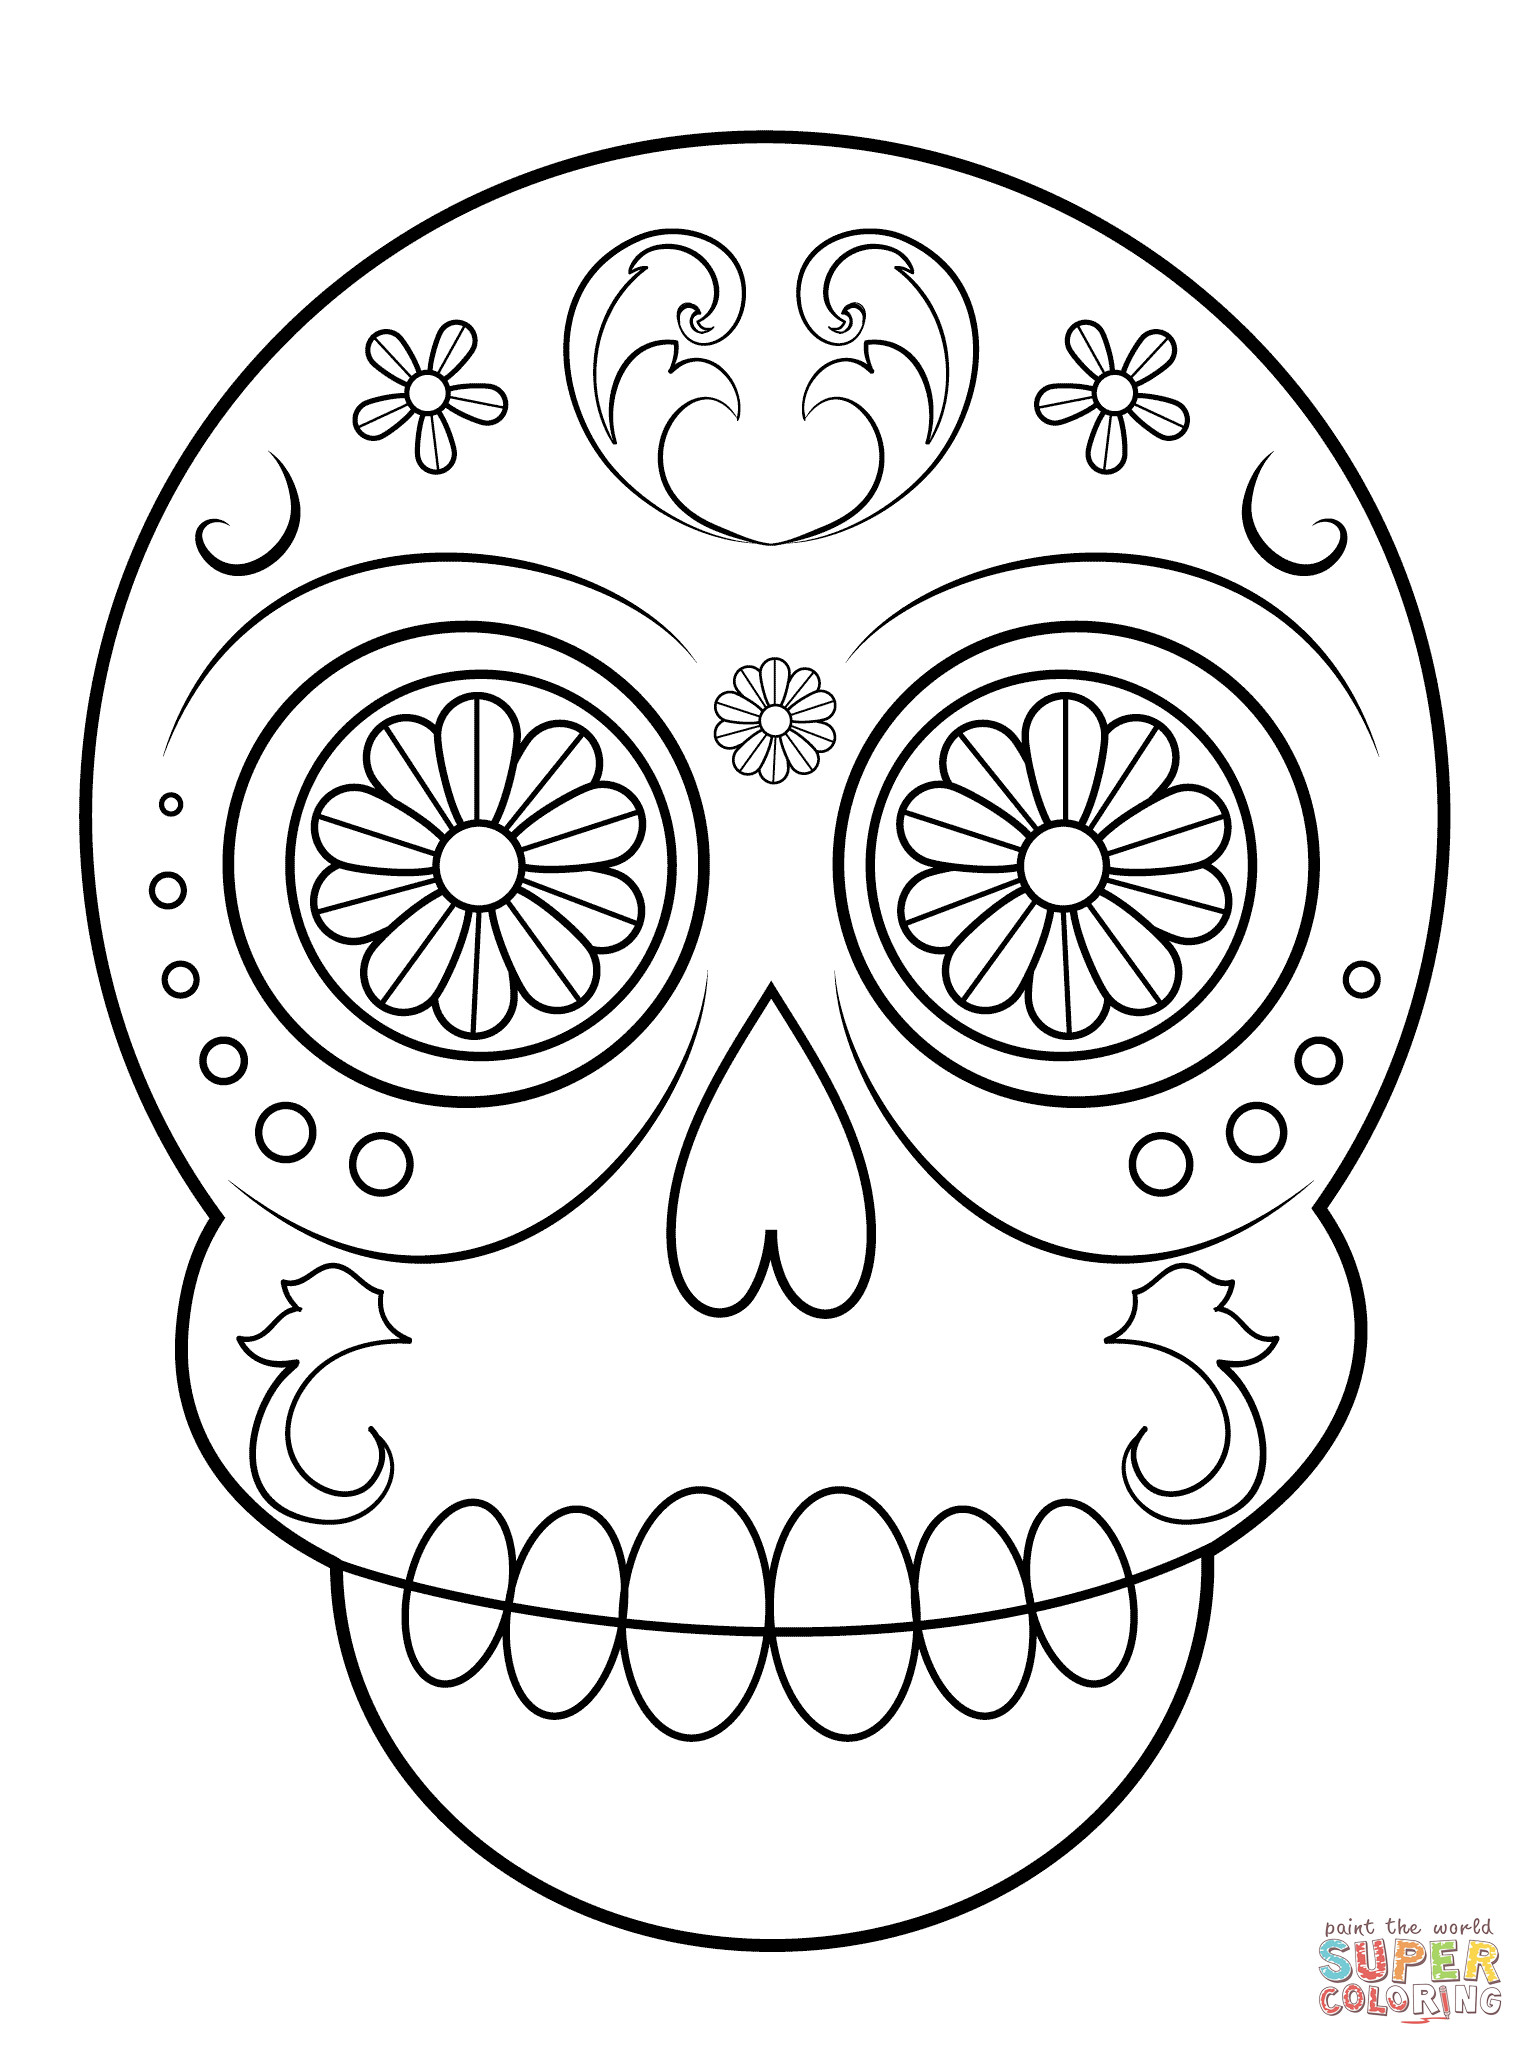 Printable Sugar Skull Coloring Pages
 Simple Sugar Skull coloring page